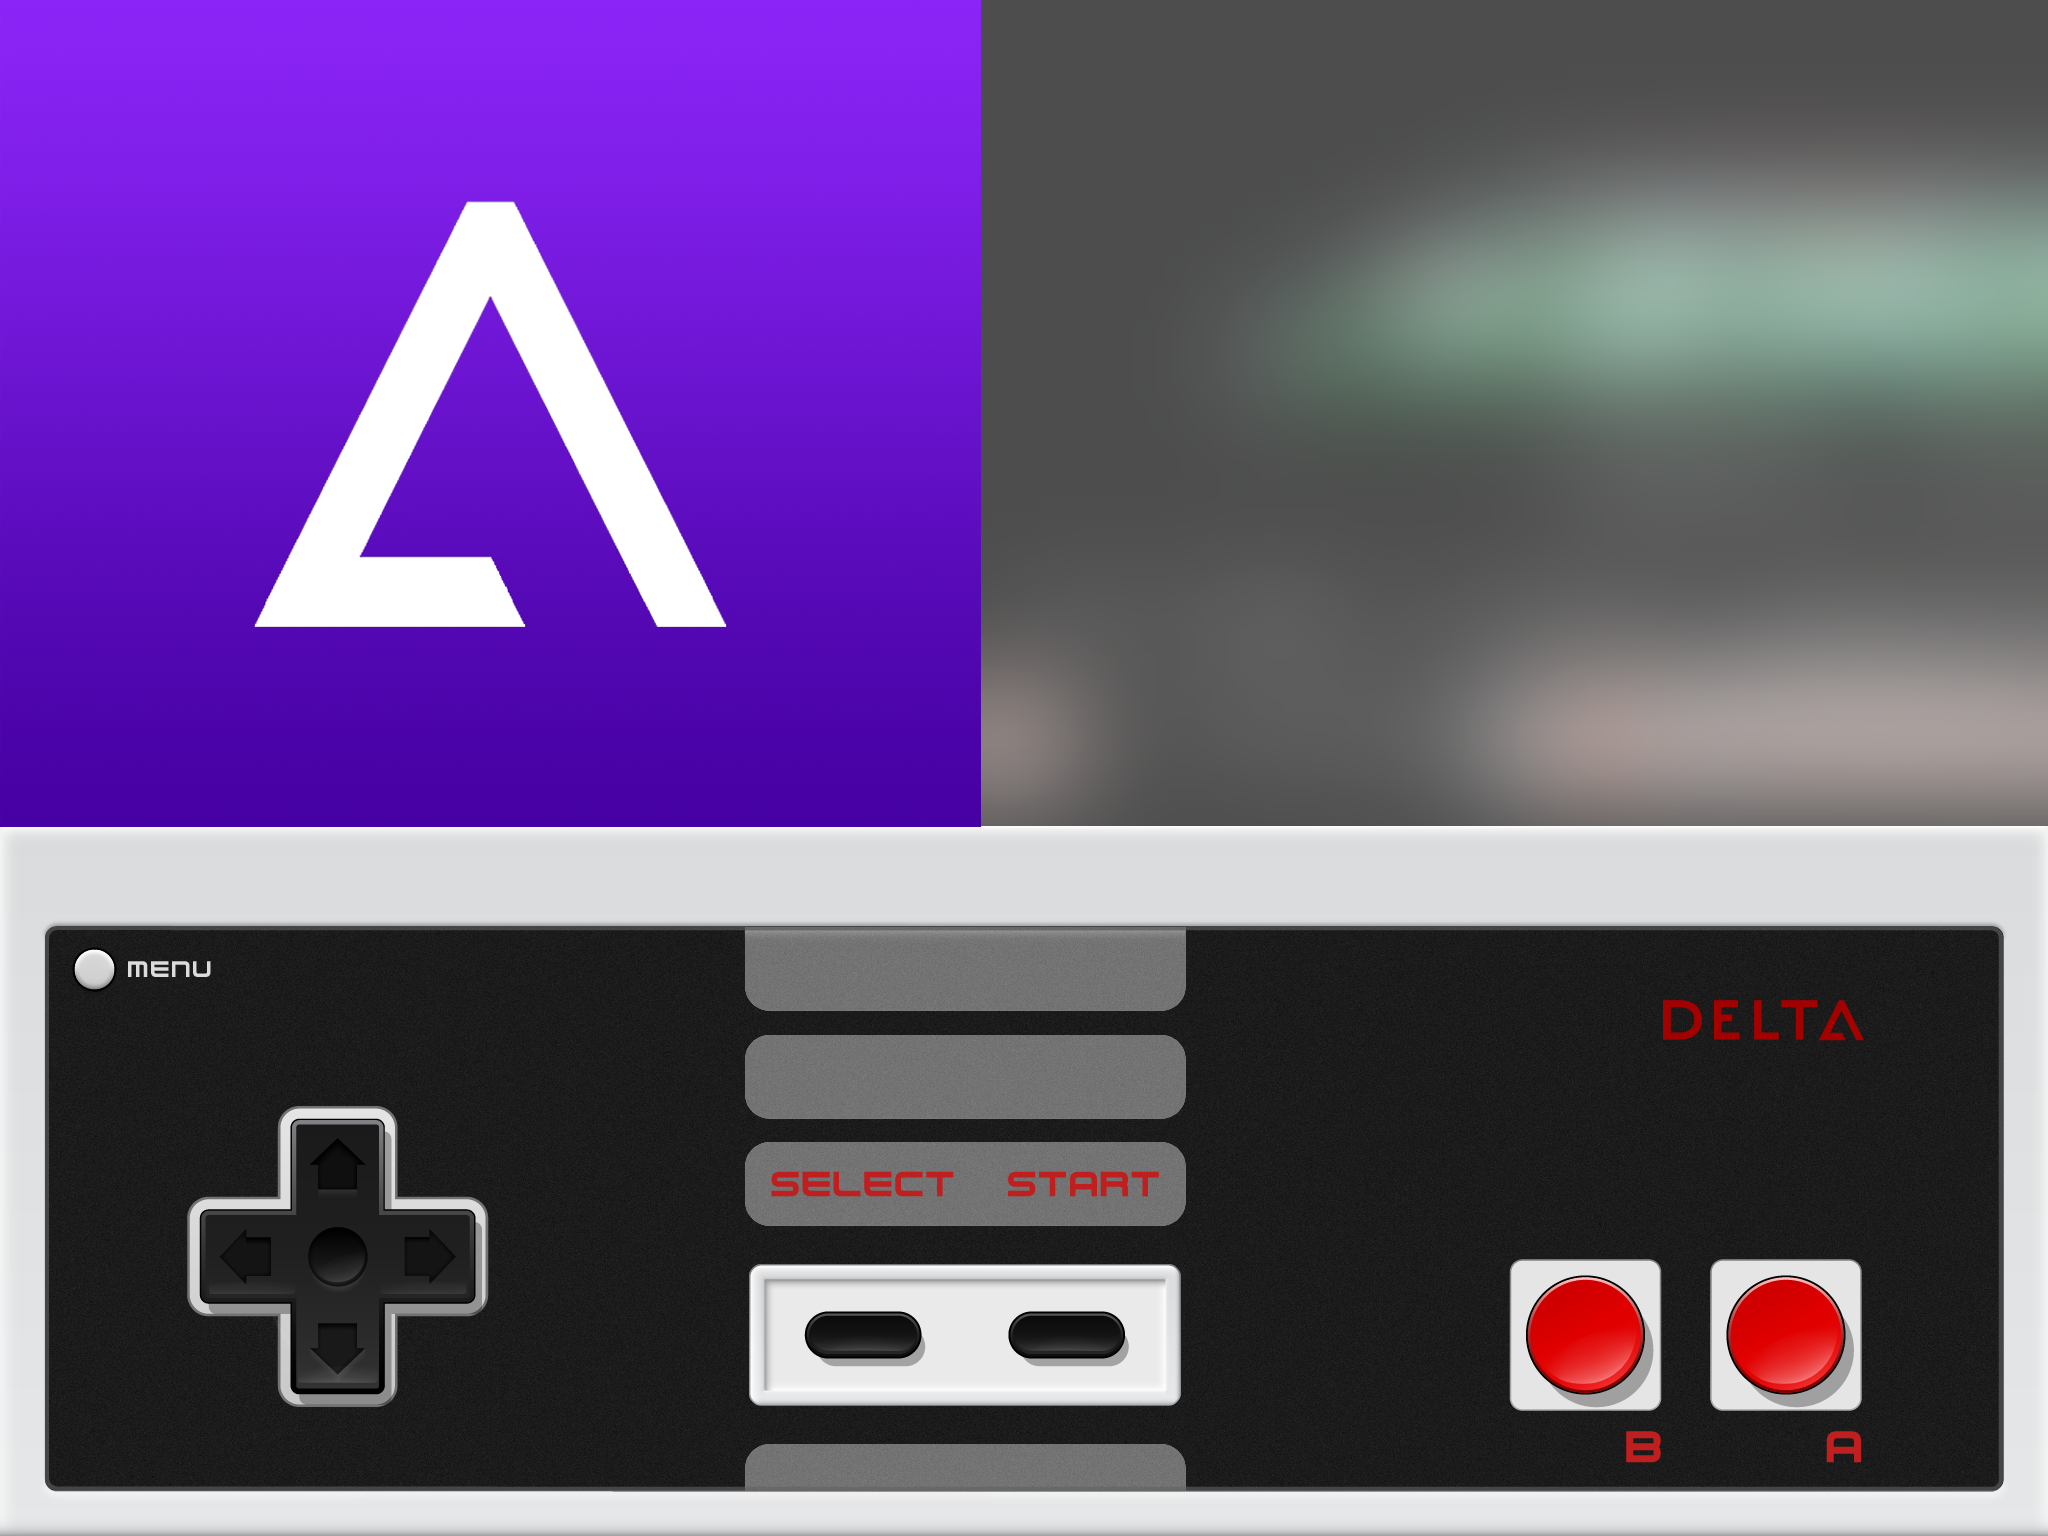 Delta Lite NES emulator